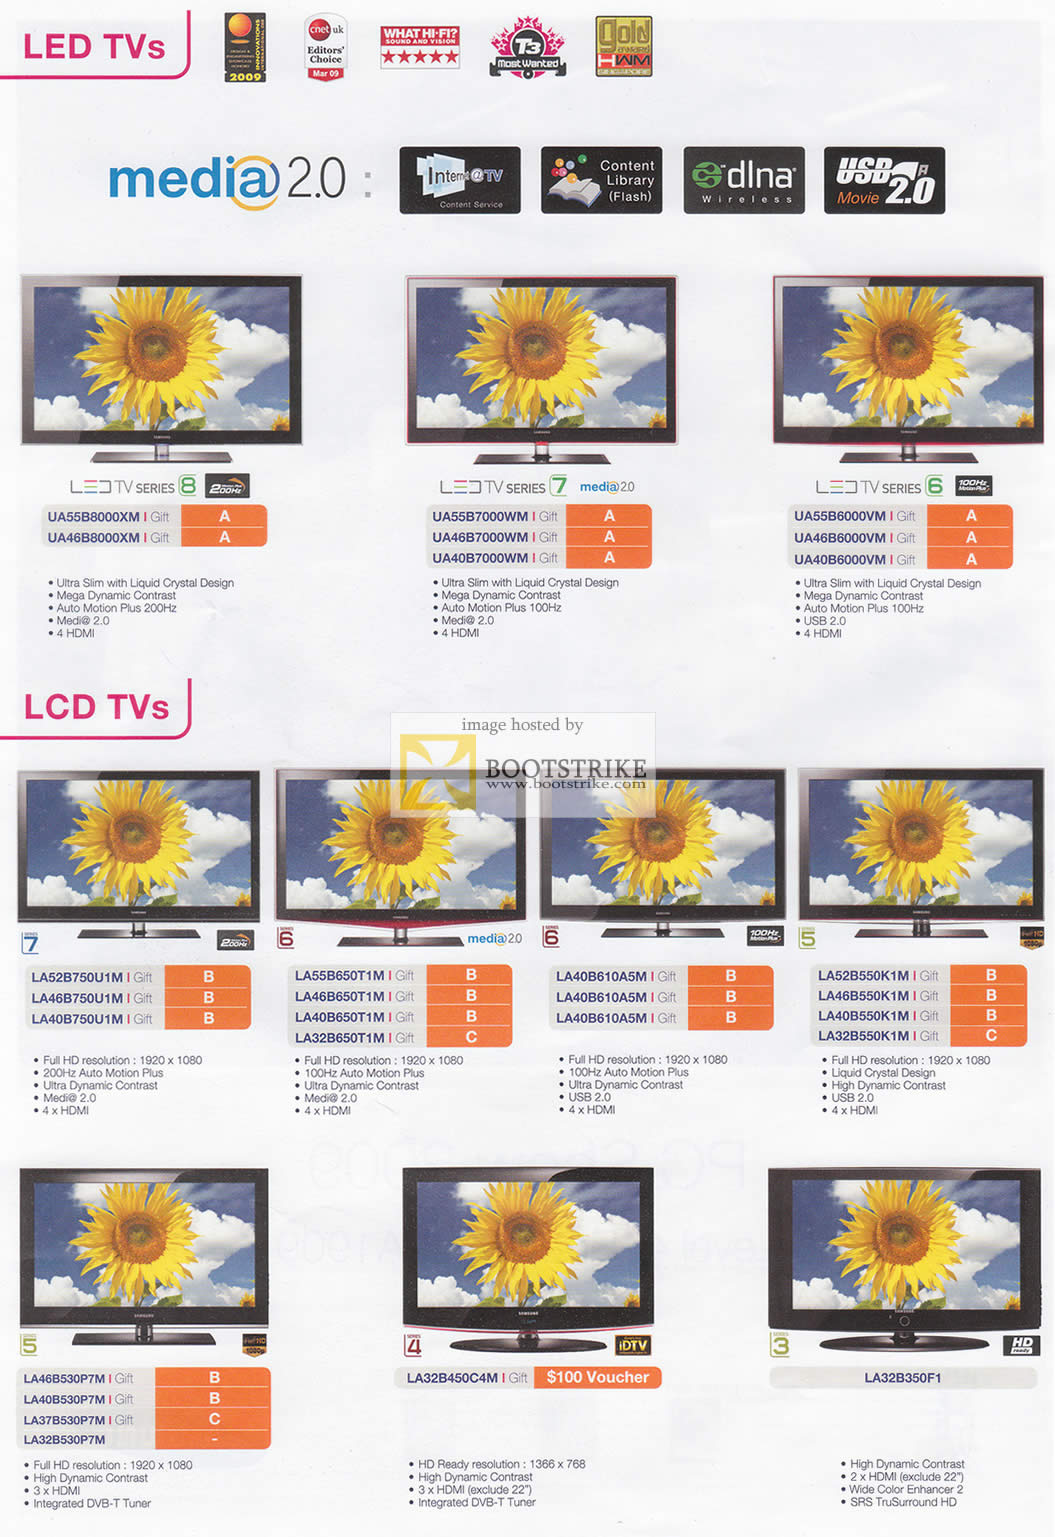 PC Show 2009 price list image brochure of Samsung LED LCD TVs Series 8 7 6 5 4 3 Media 2.0